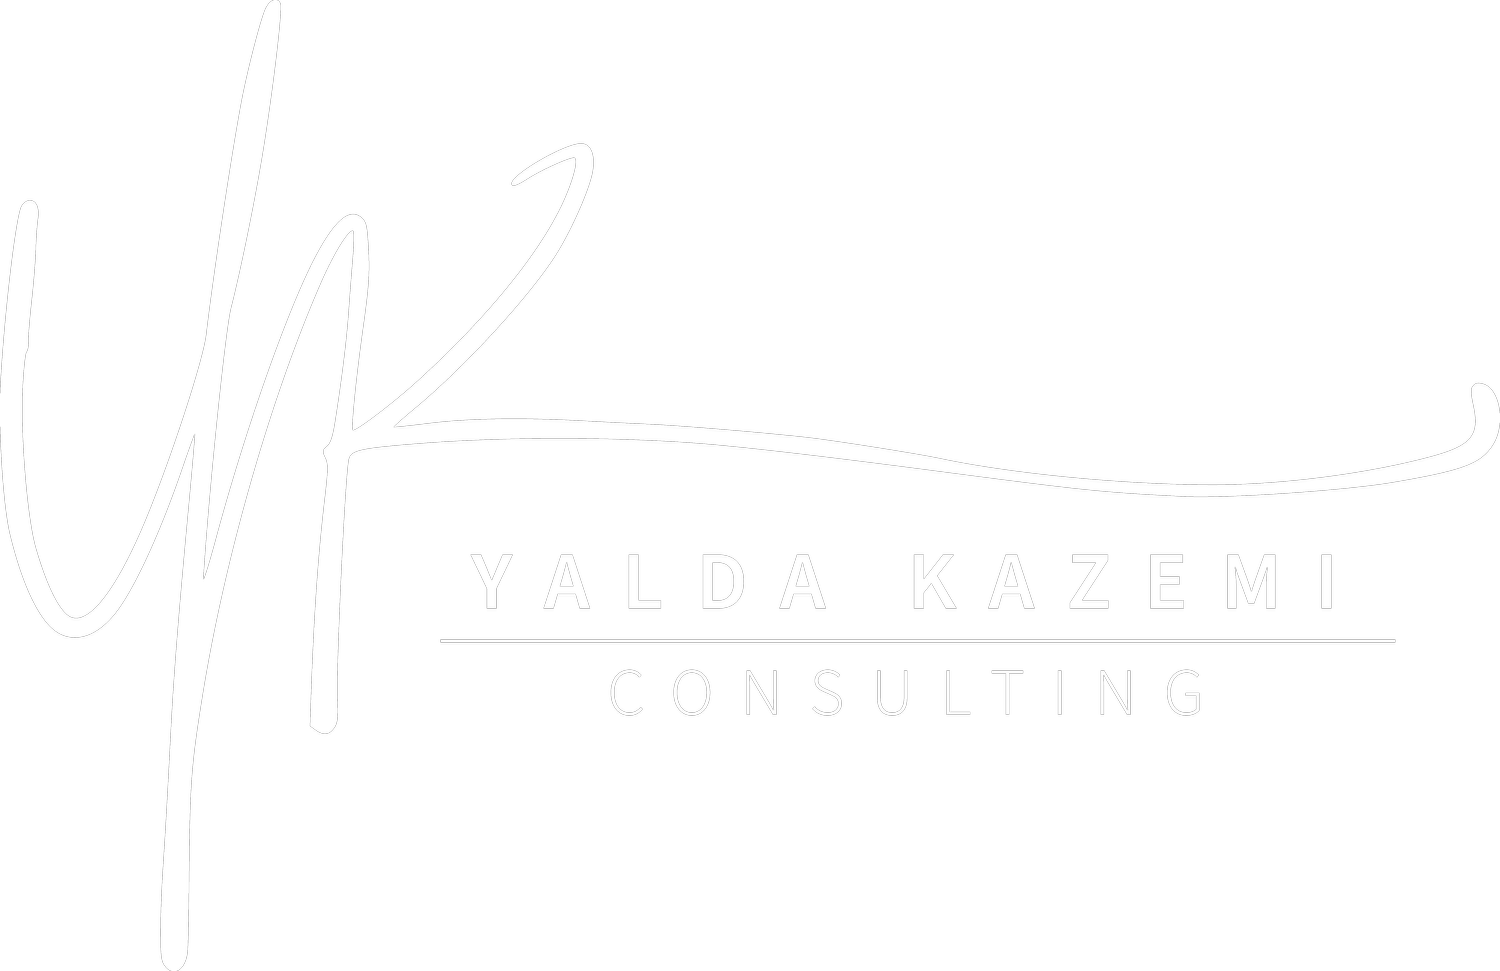 Yalda Kazemi Consulting